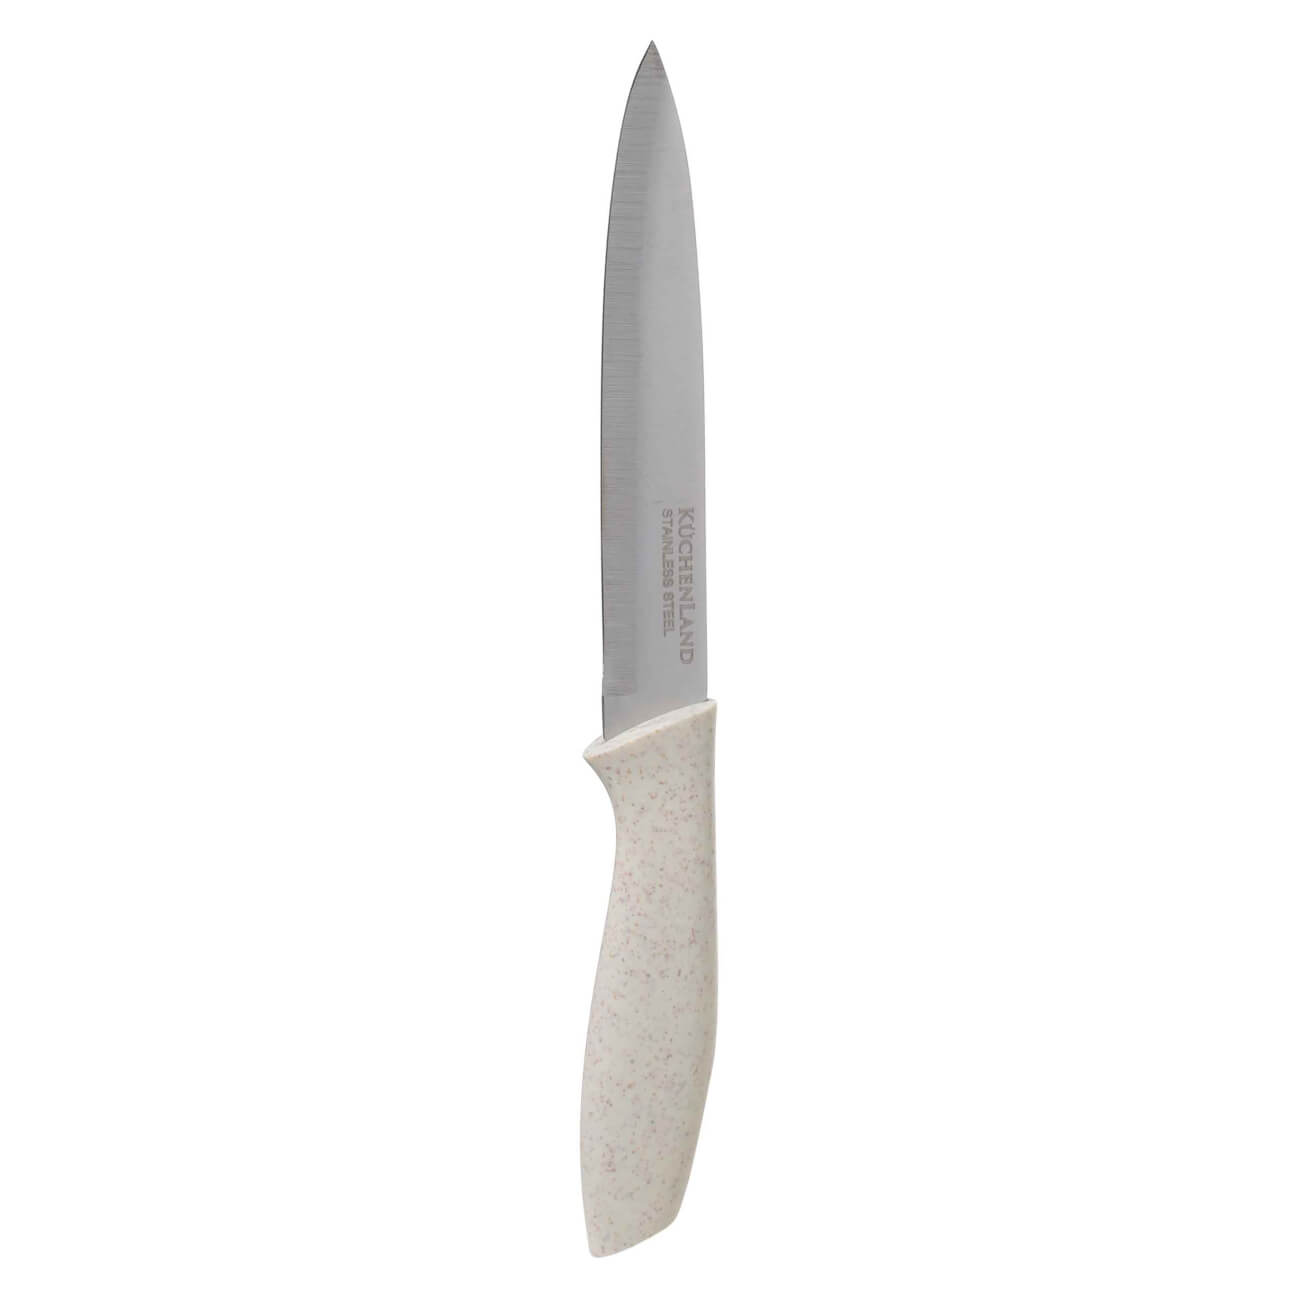 Нож для нарезки, 13 см, сталь/пластик, молочный, Speck-light нож для нарезки соломкой 17 см сталь пластик молочный regular